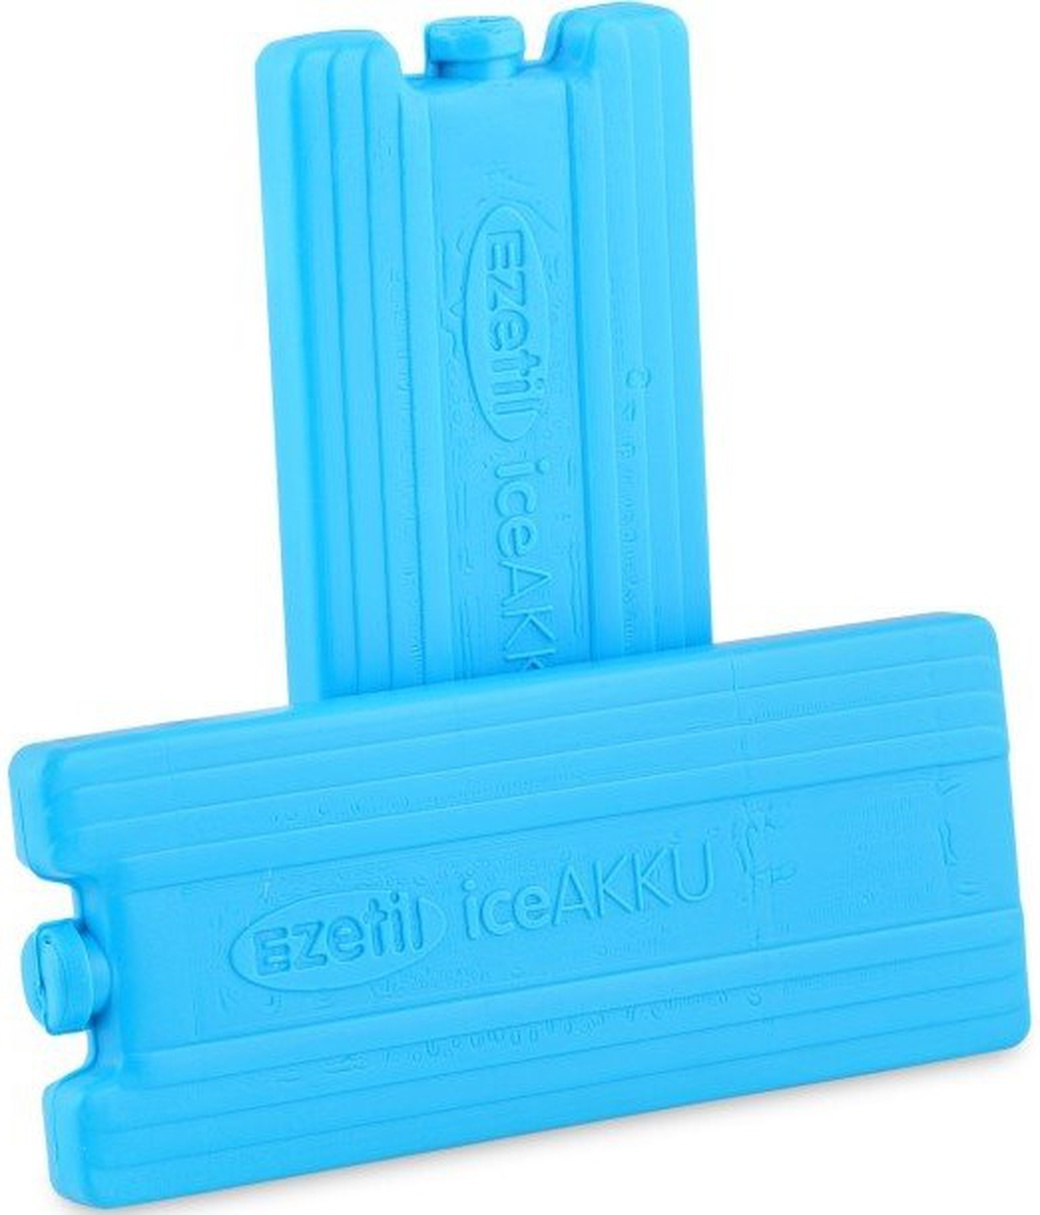 Аккумулятор холода Ezetil Ice Akku (2 шт. х 300 гр.) фото